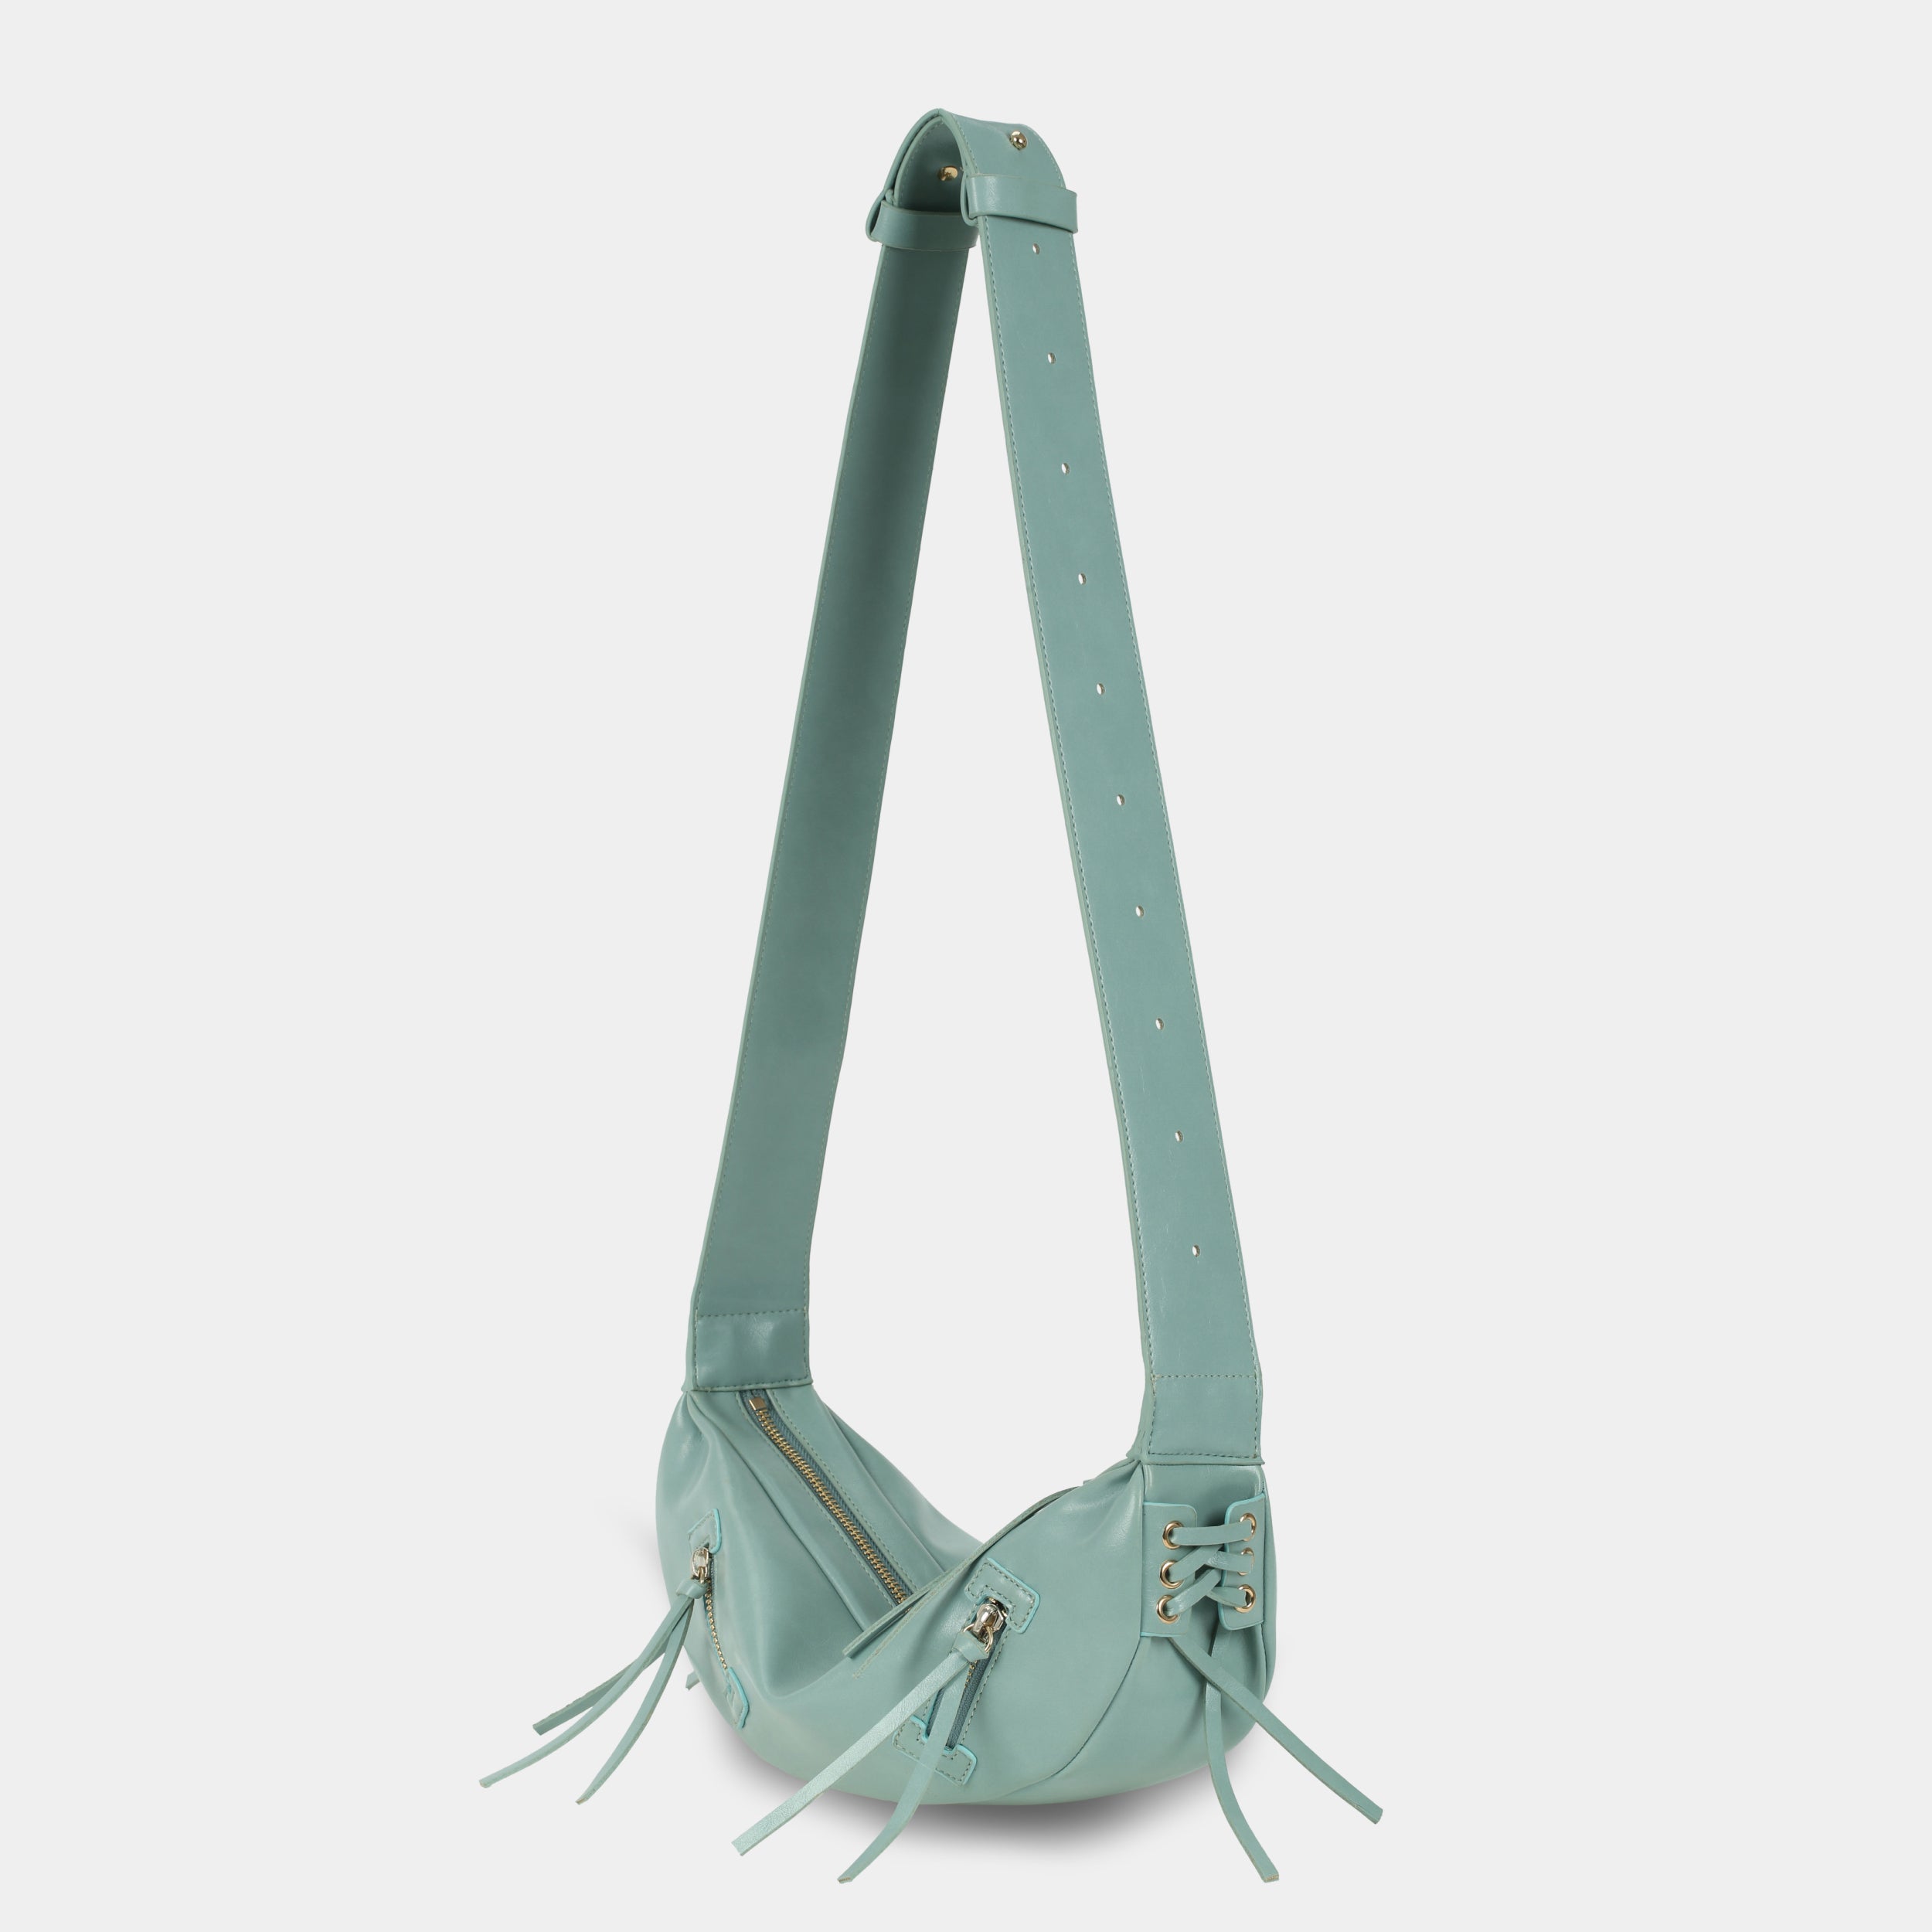 LACE bag large size (M) pastel turquoise